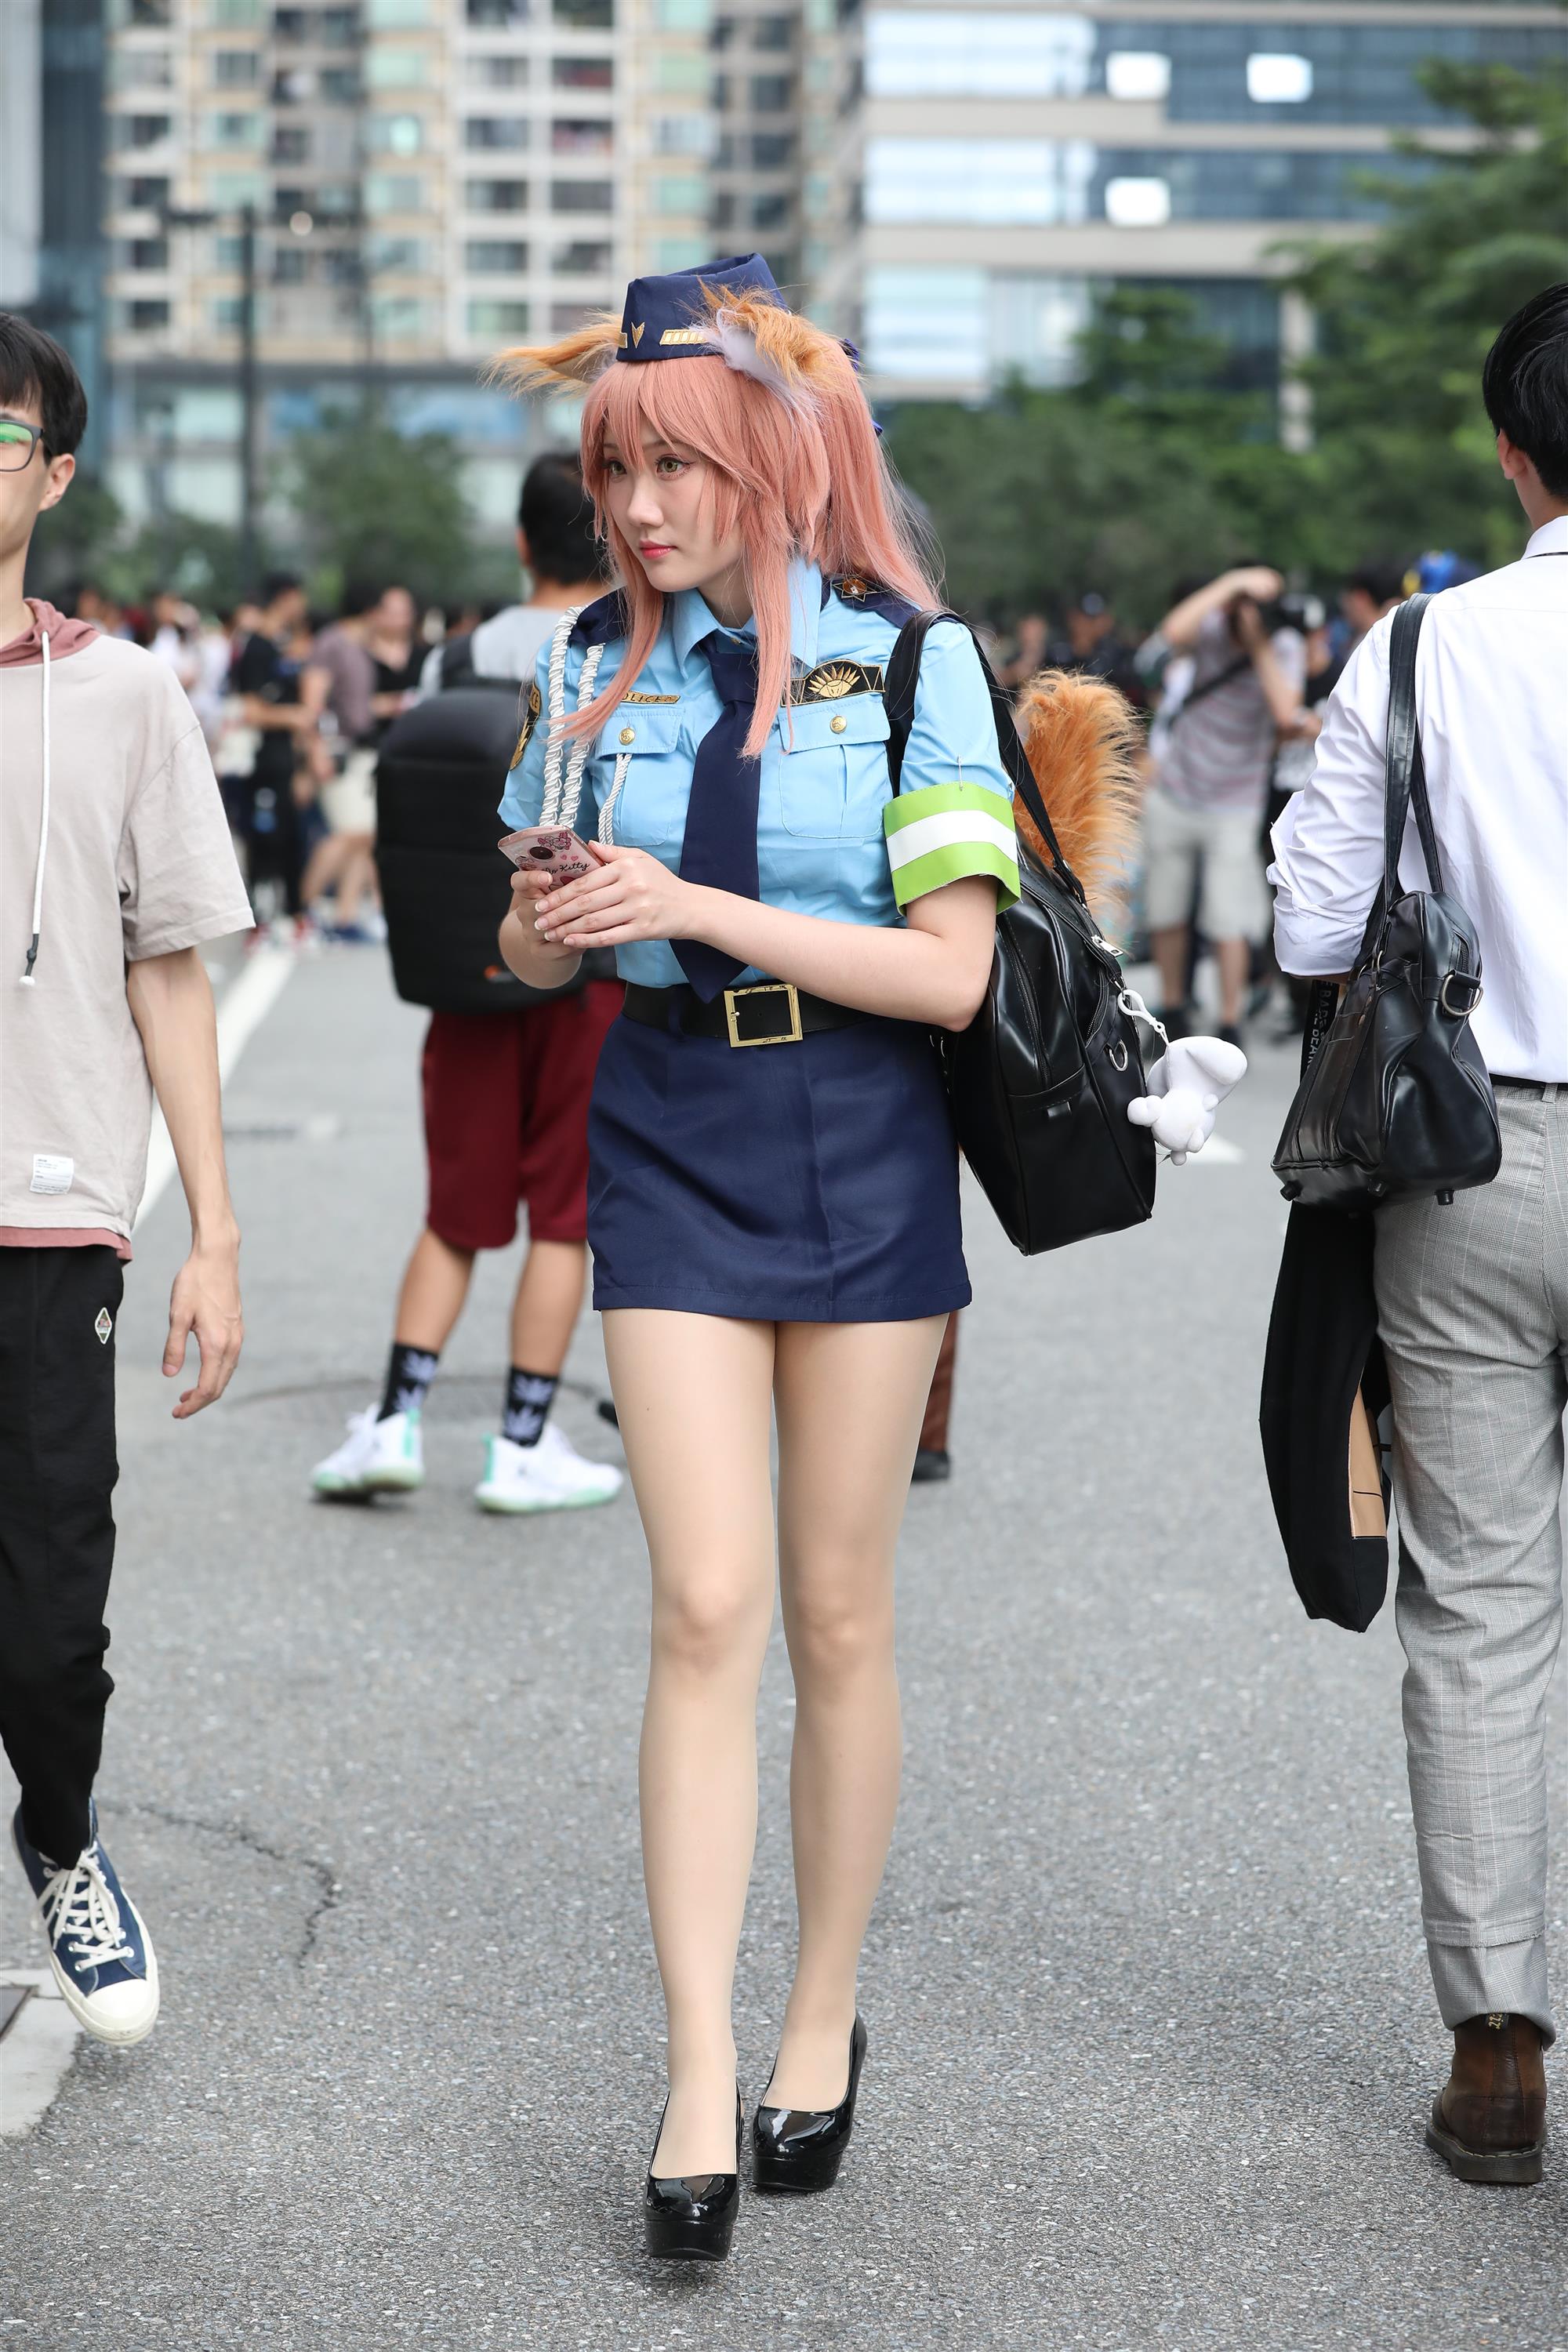 Street cosplay girl - 20.jpg